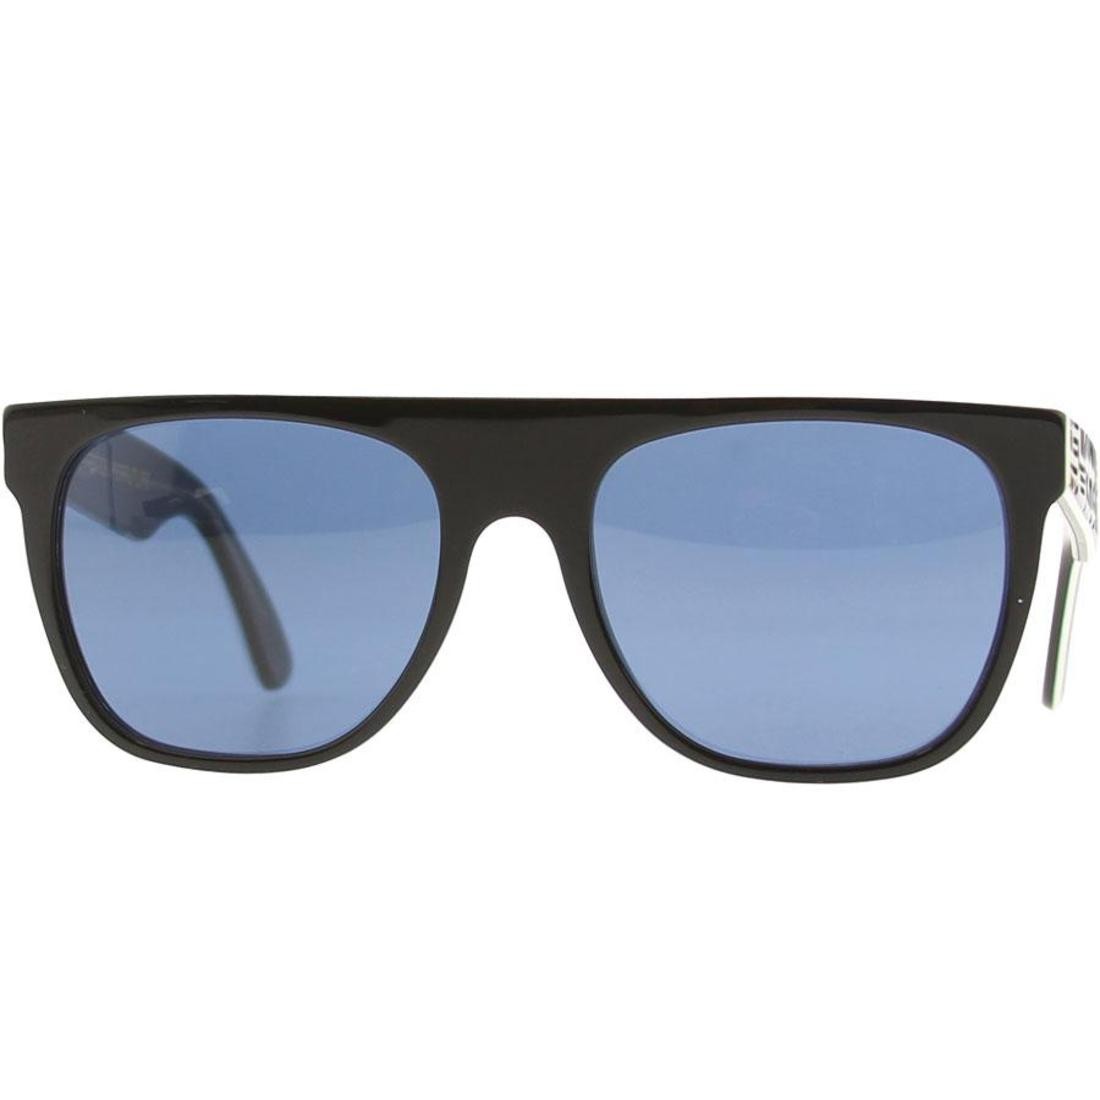 Super Sunglasses Flat Top (moross afrika)